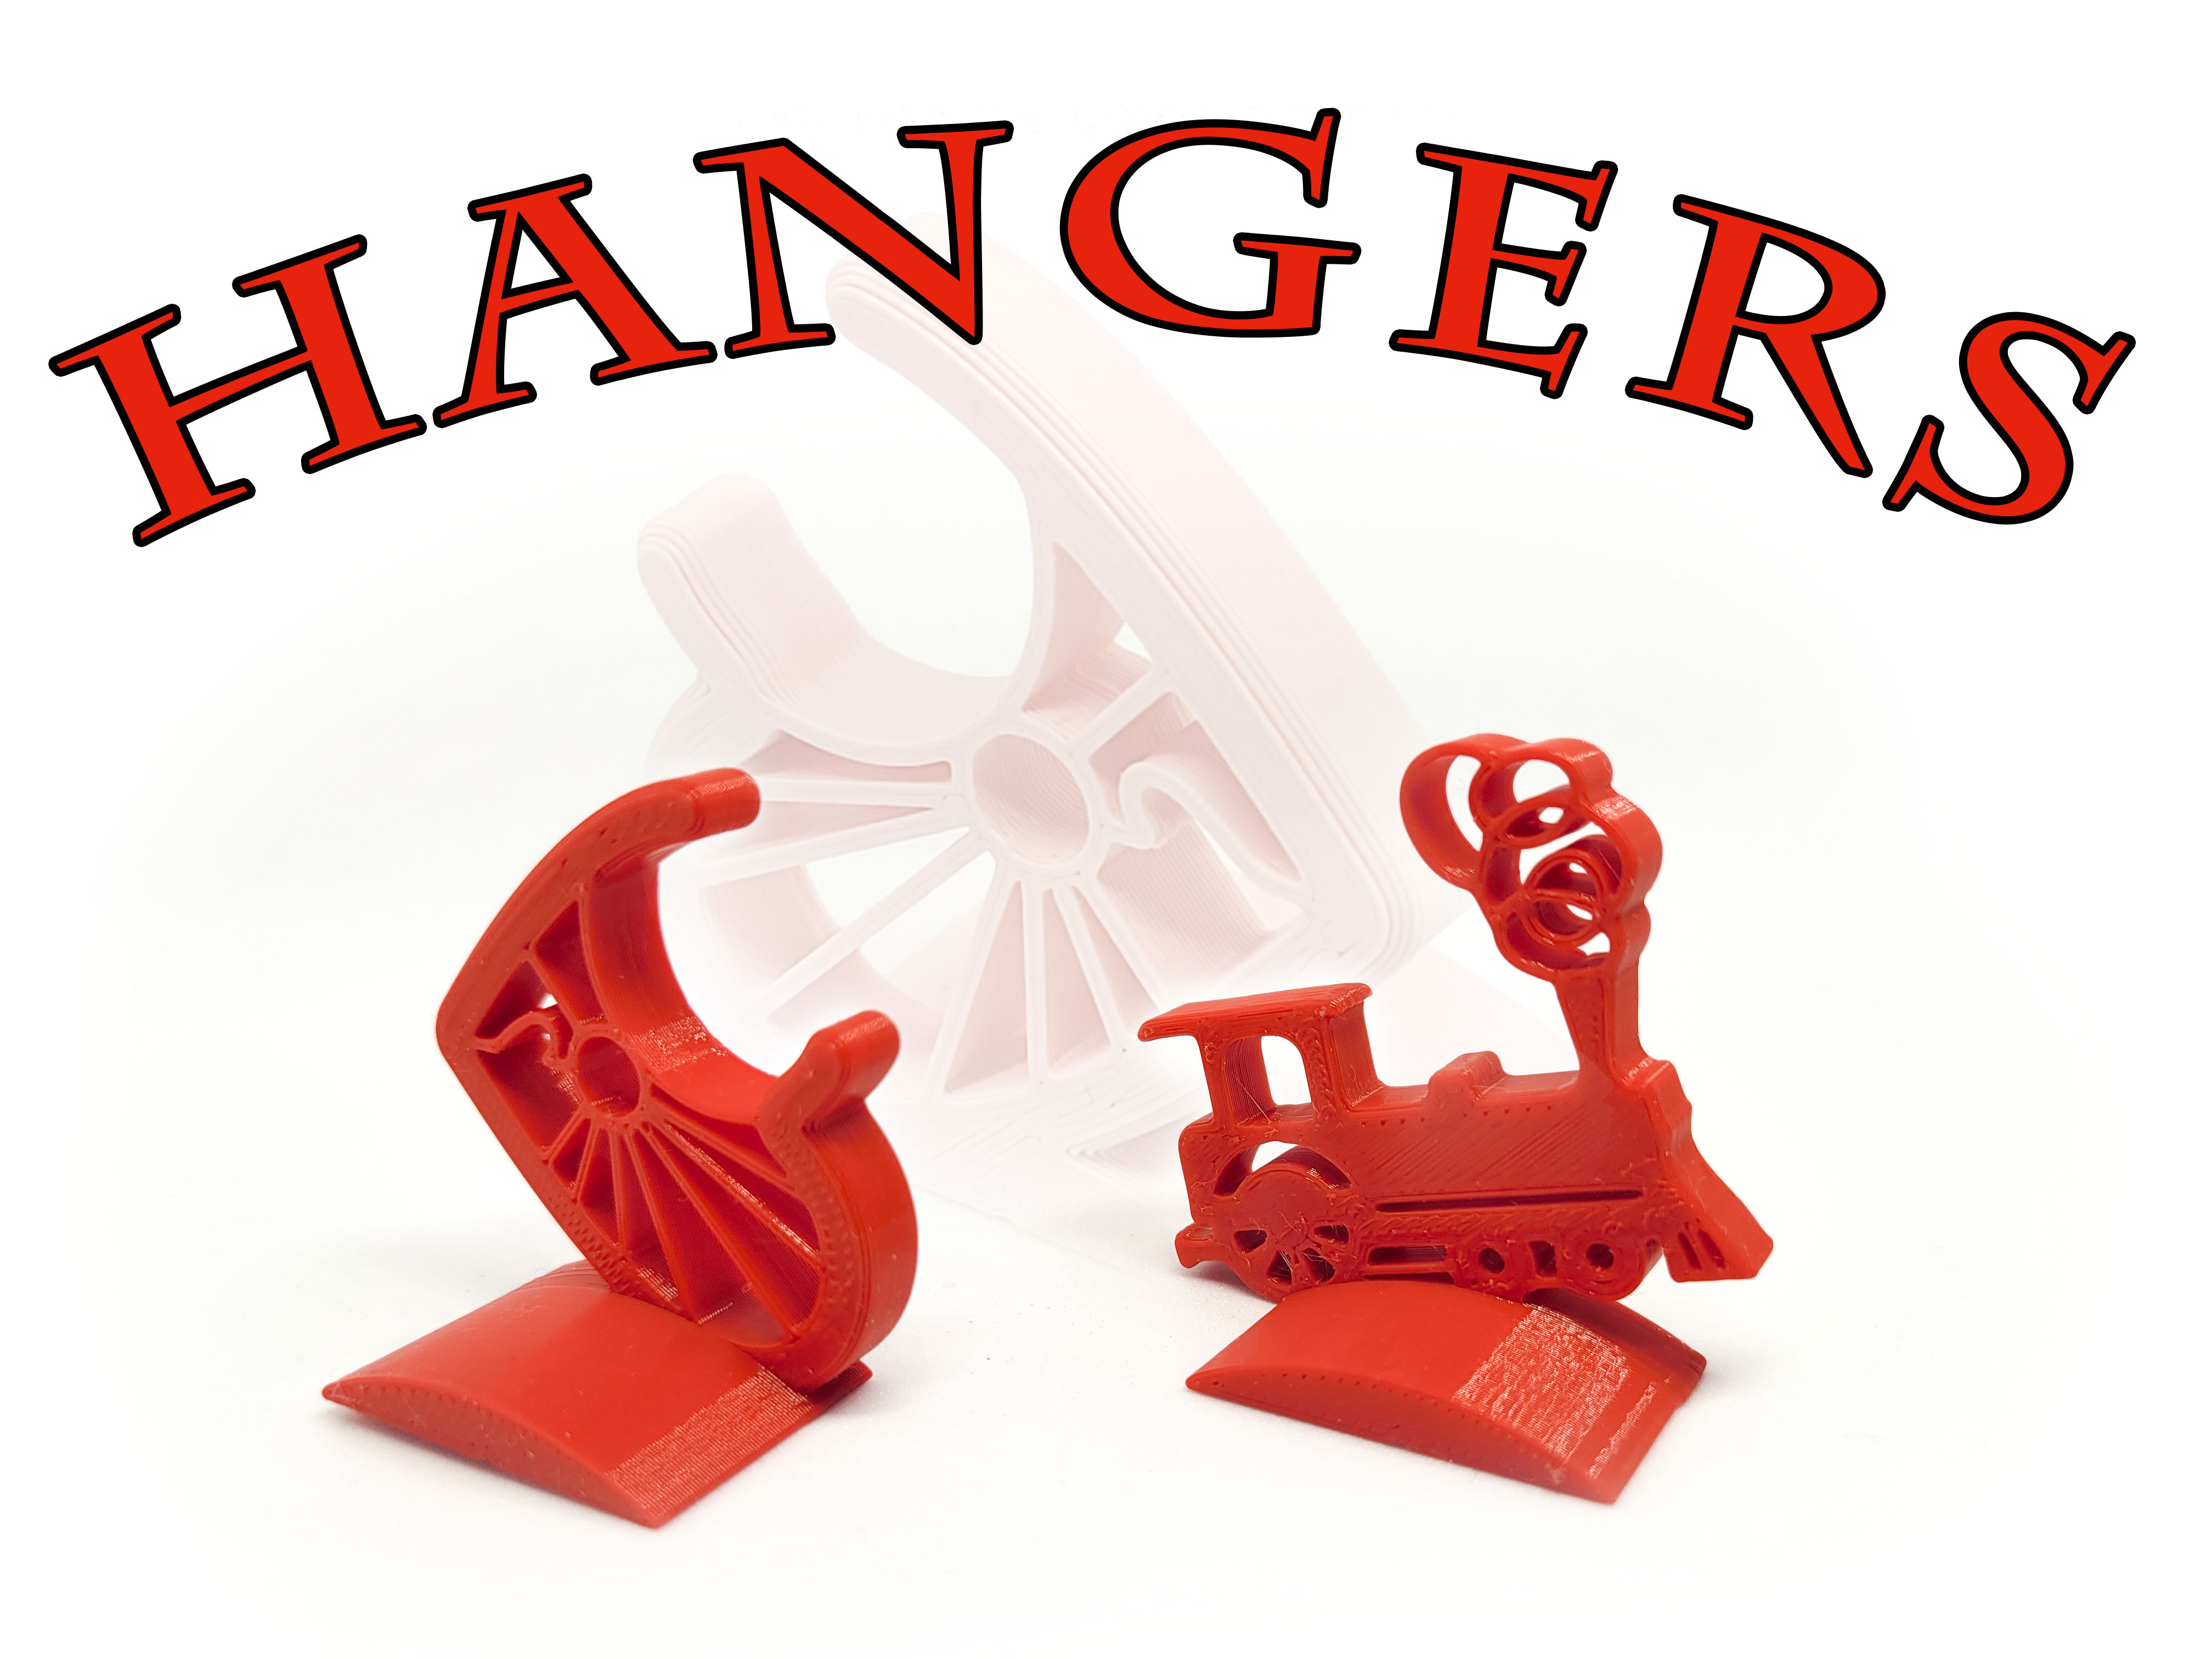 Heart shaped and steam engine shaped hooks / hangers